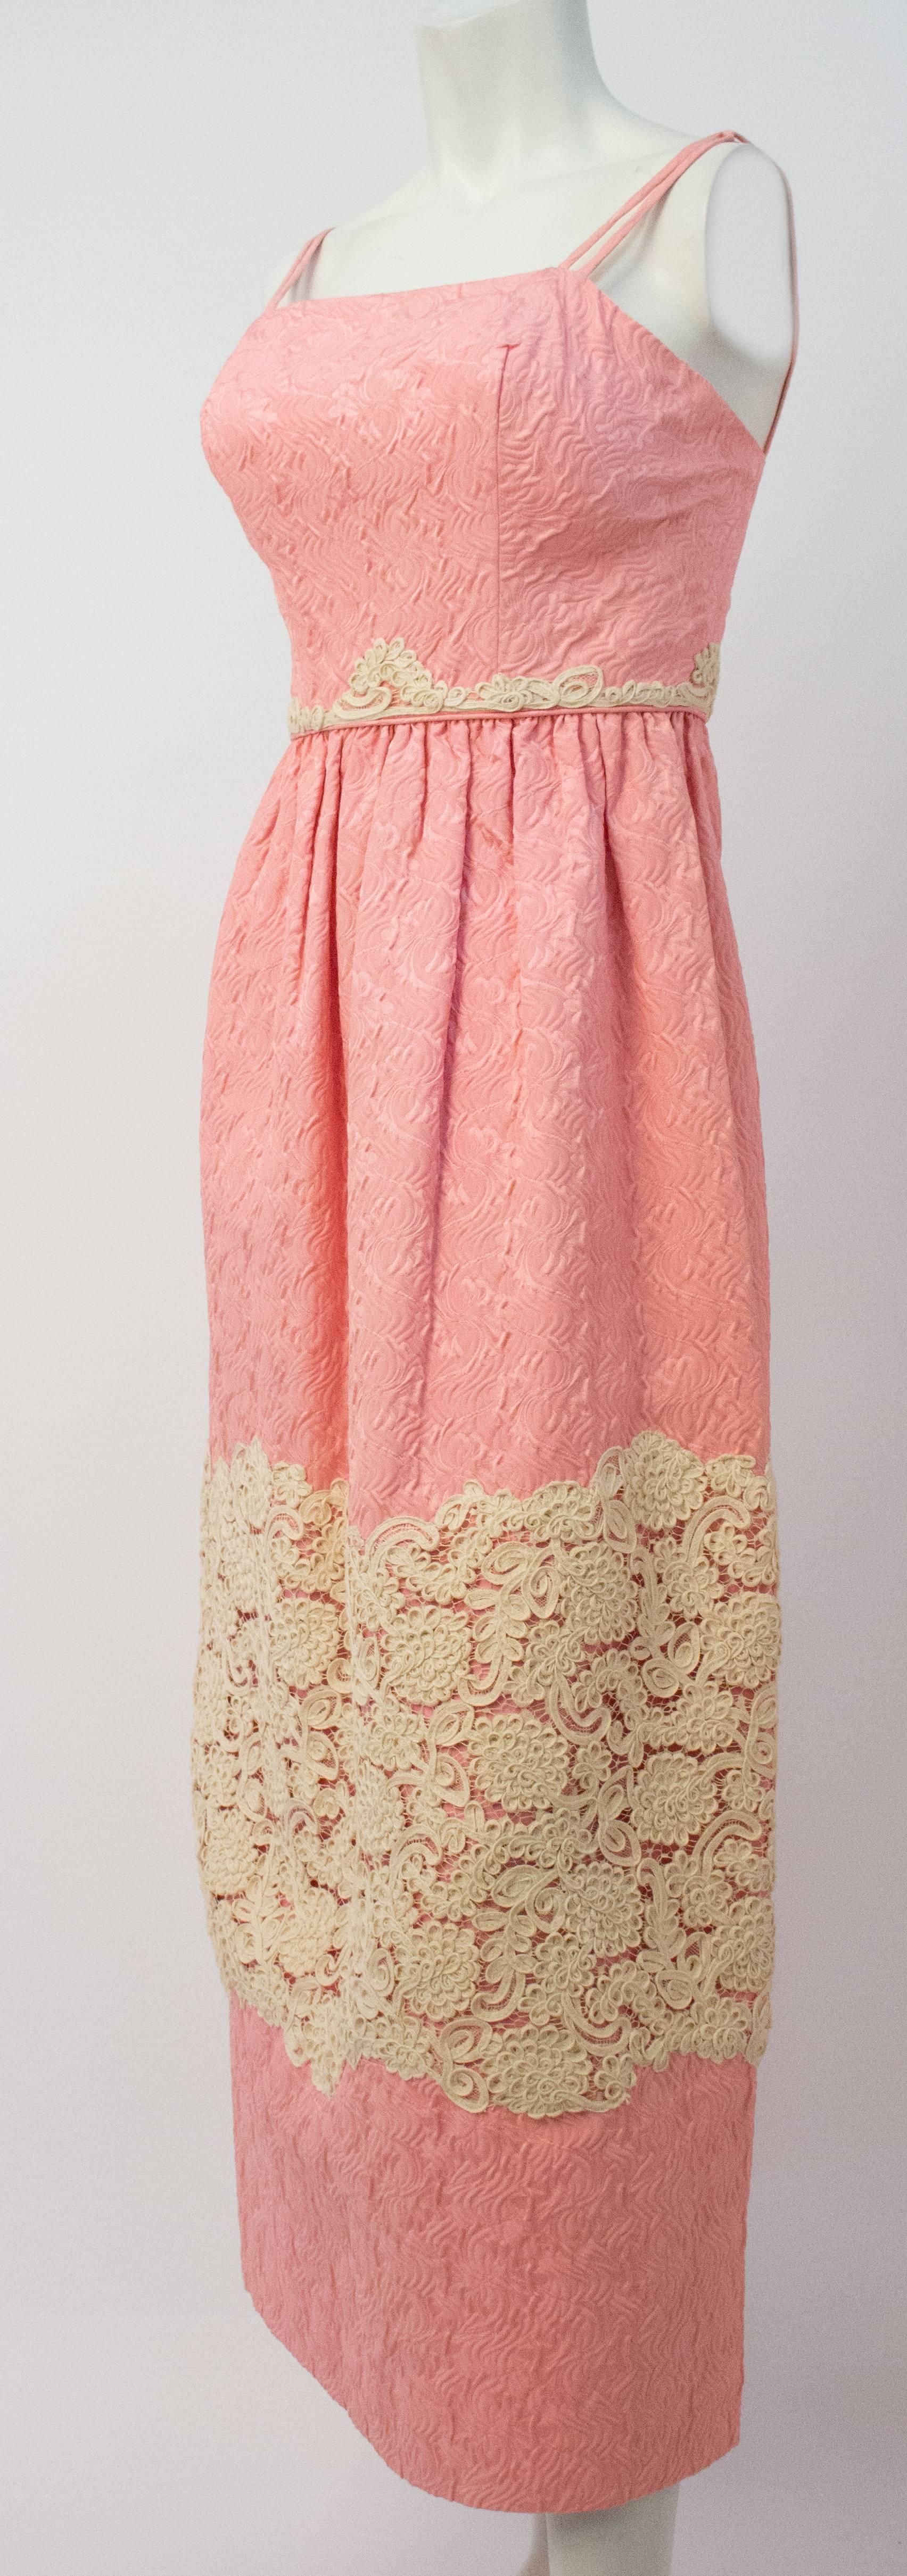 60s Pink Column Dress w/ Lace Appliqué. Fully lined, boned bodice. Metal back zip.